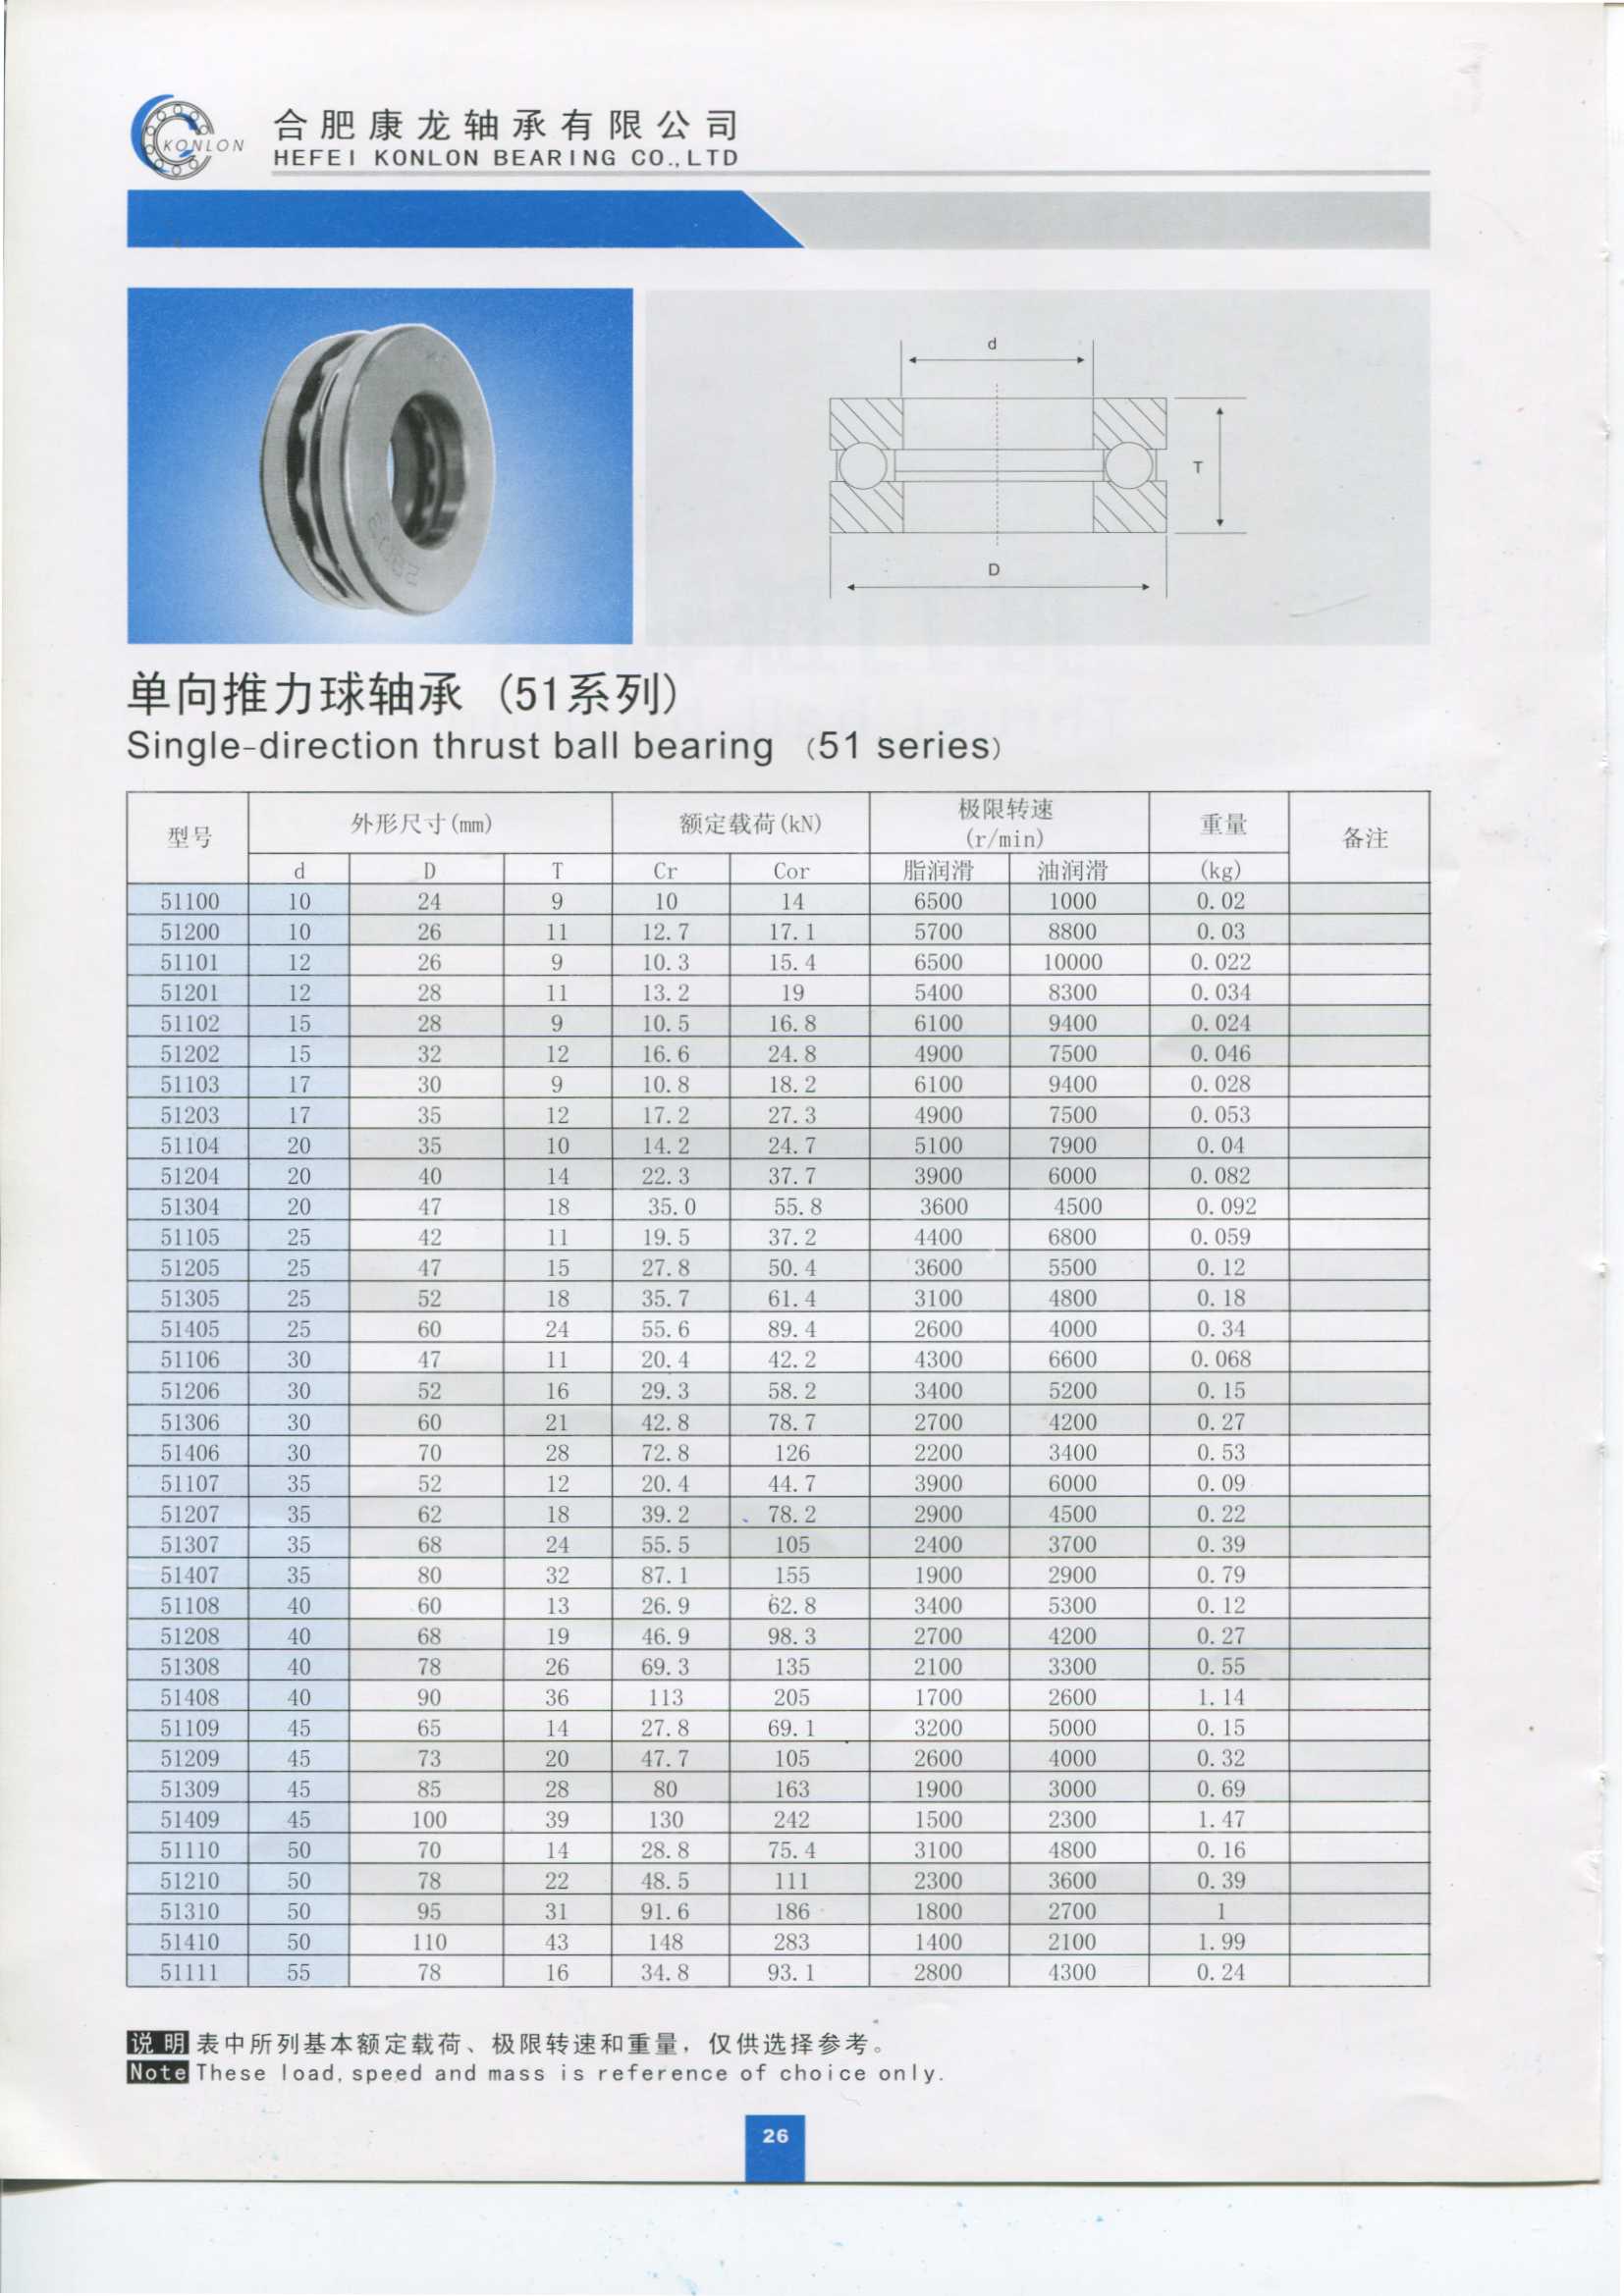 High precision thrust ball bearing 51104 for doors